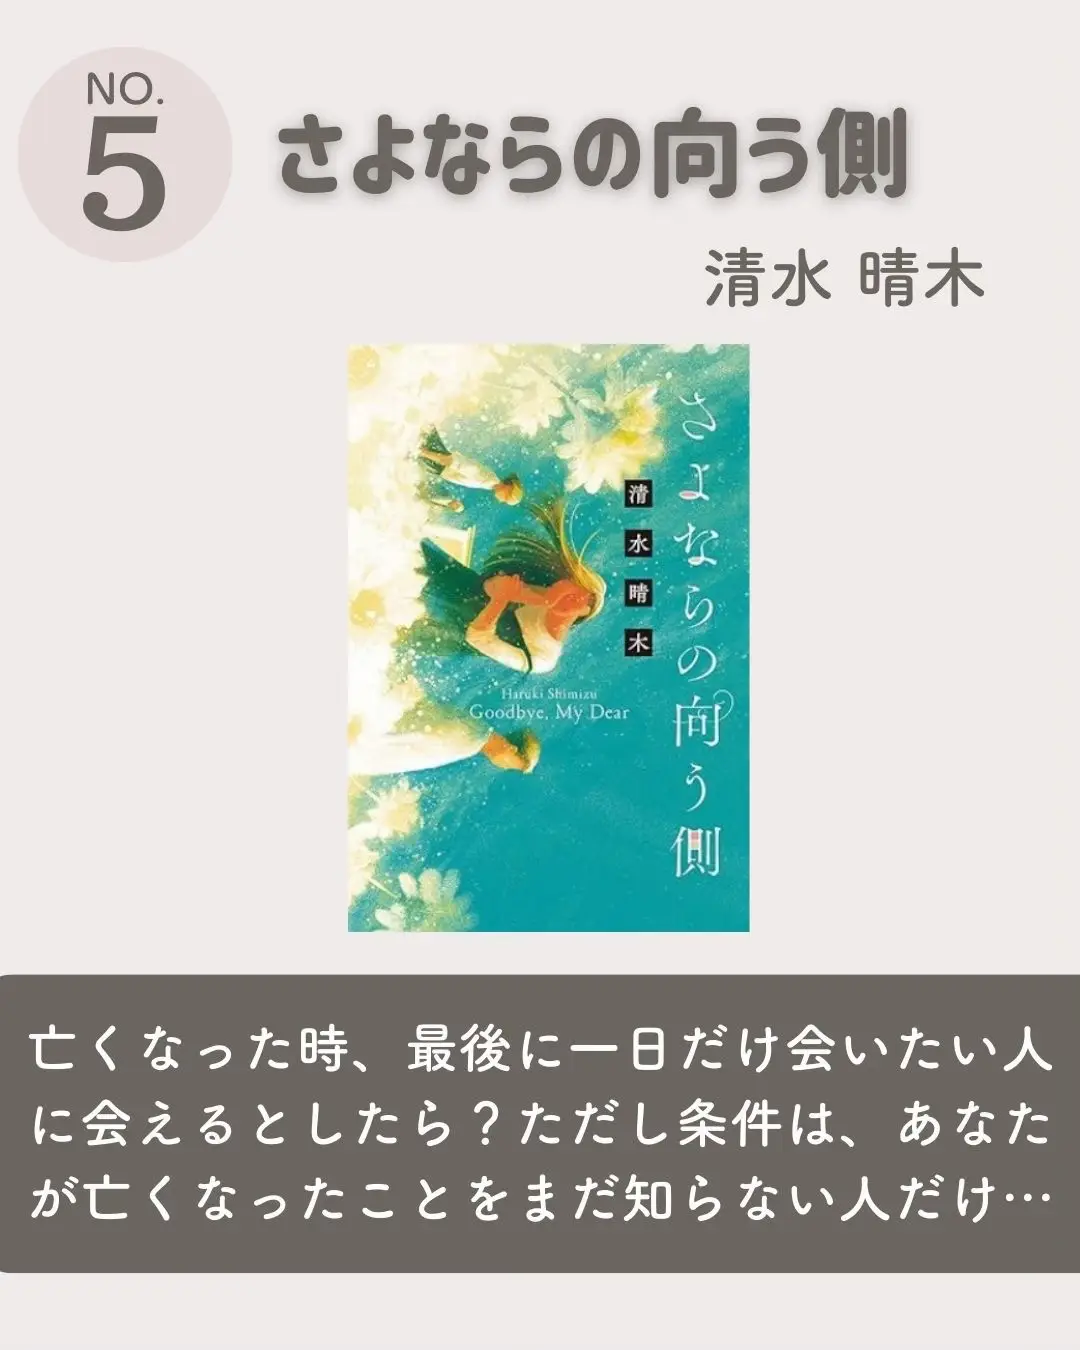 Books with Romantic Subplots - Lemon8検索